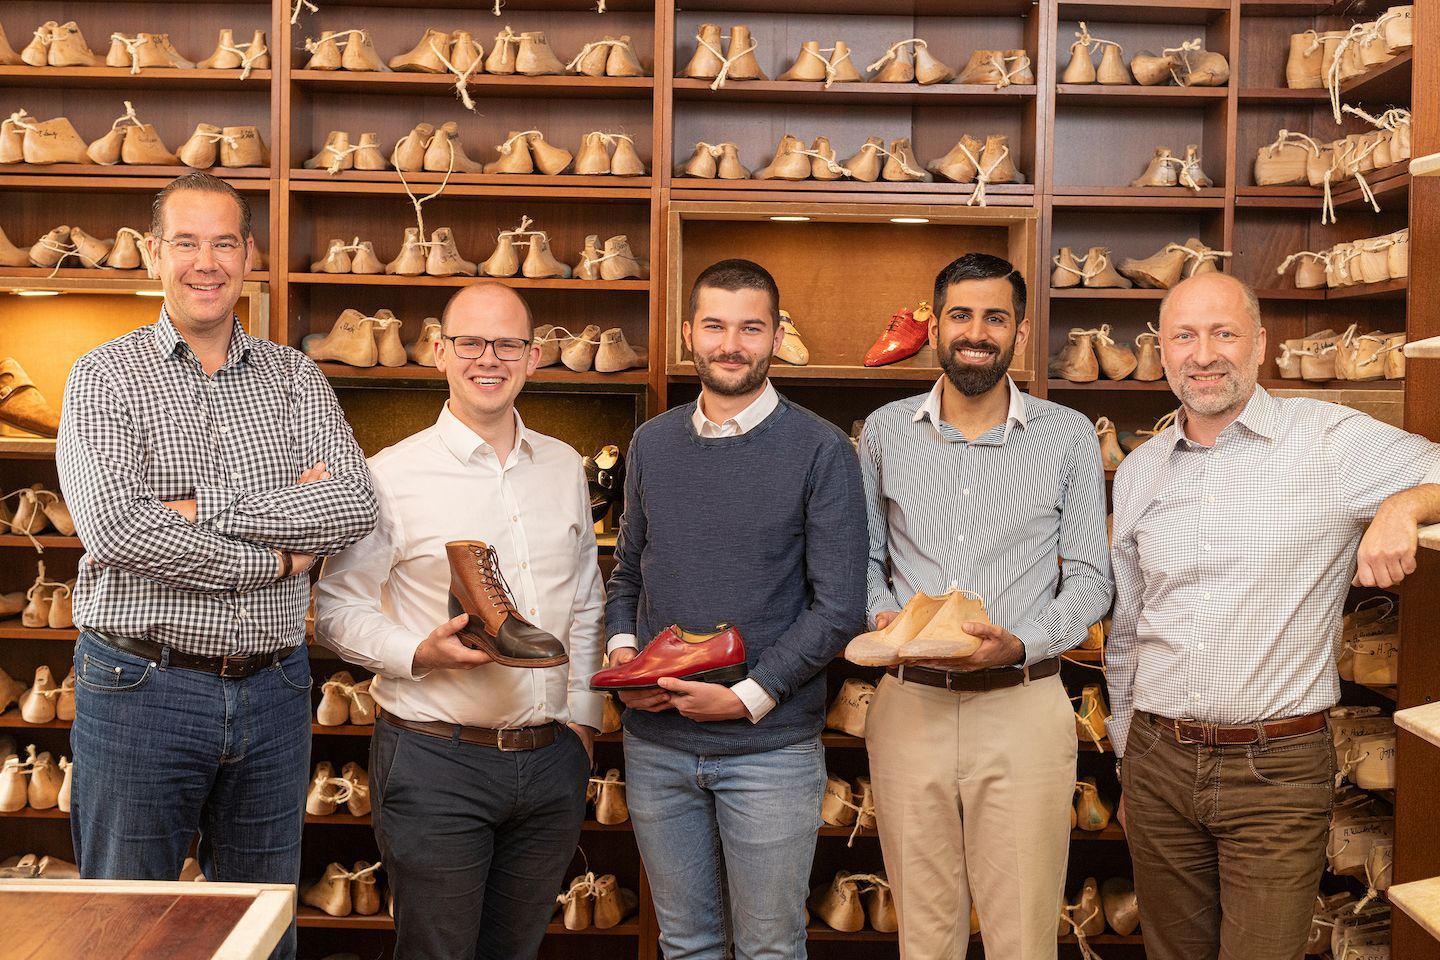 Modum team presenting the shoes